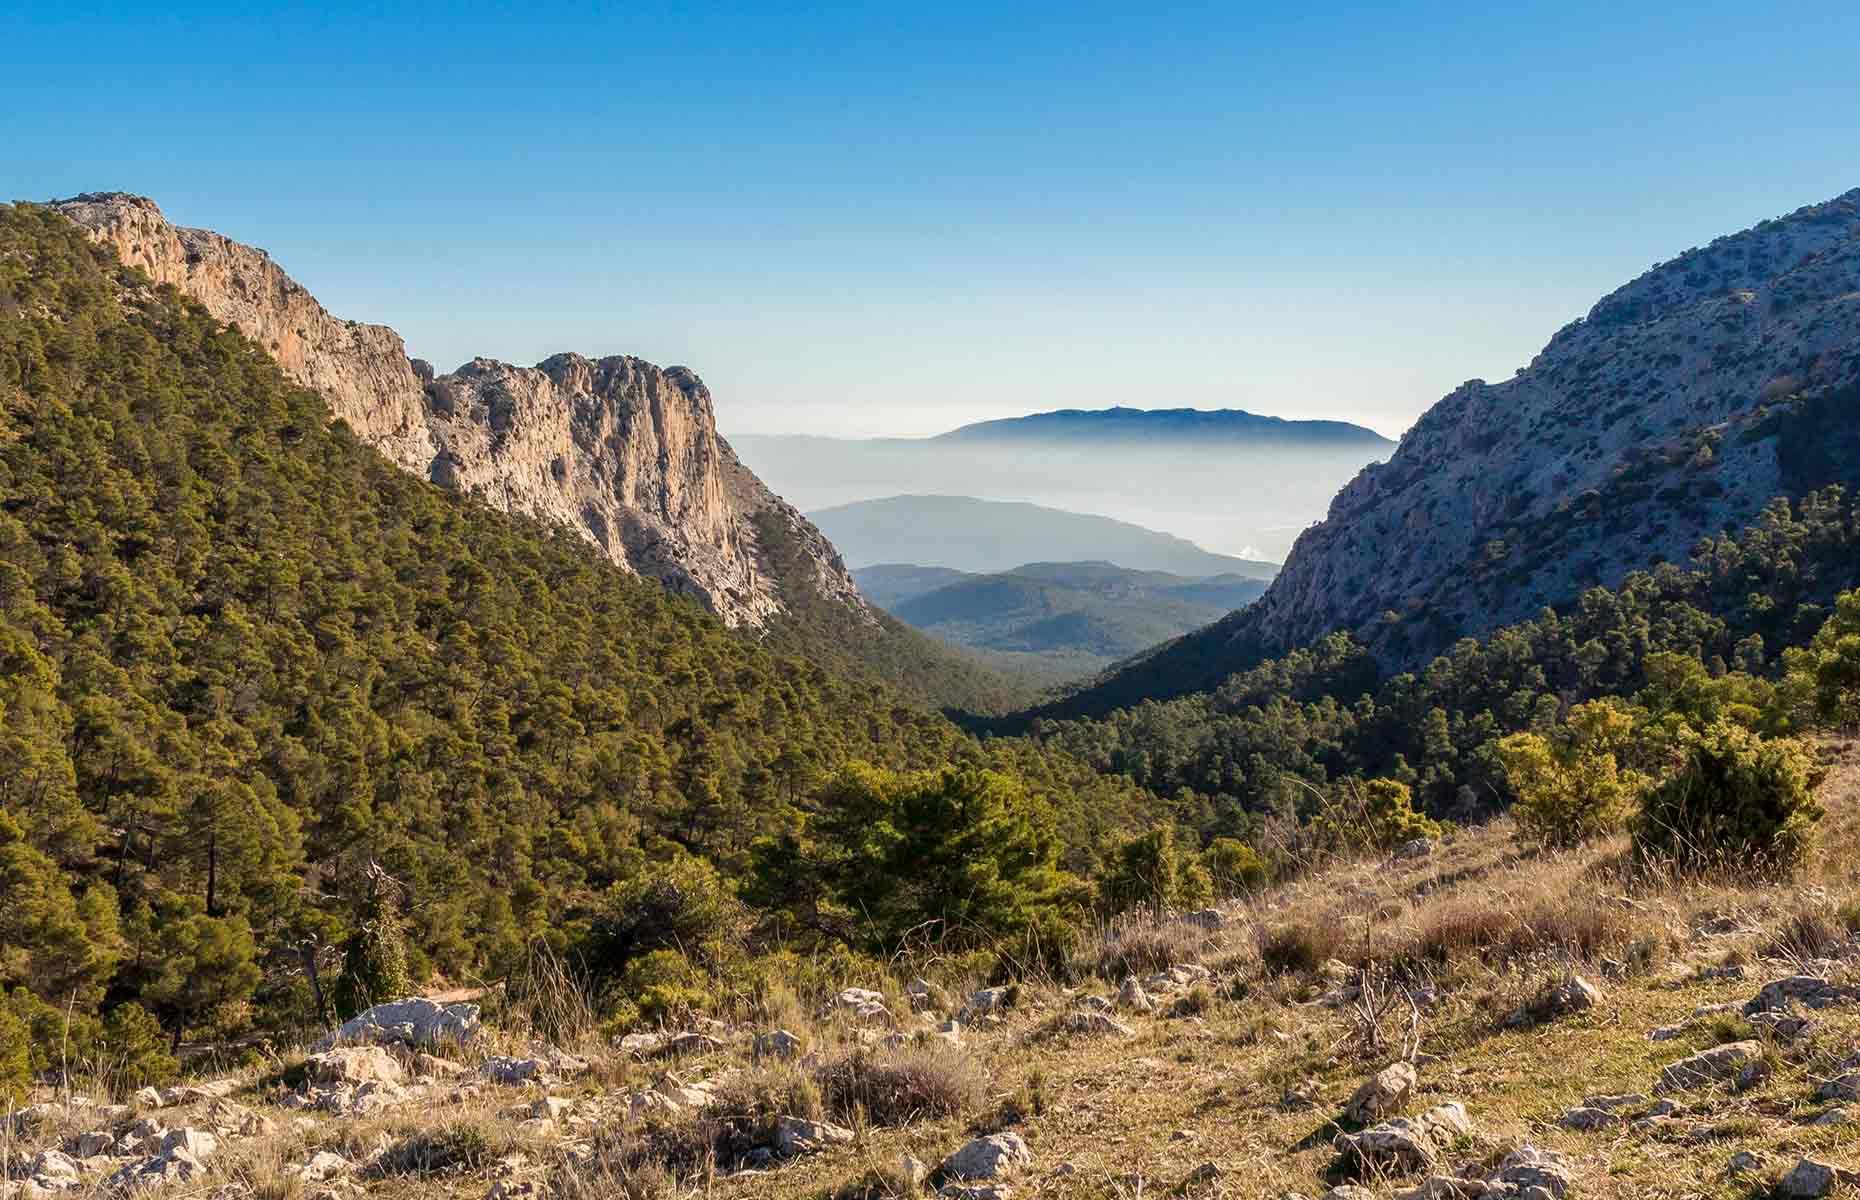 Murcia's mountain ranges (Image: Jose Aldeguer/Shutterstock)